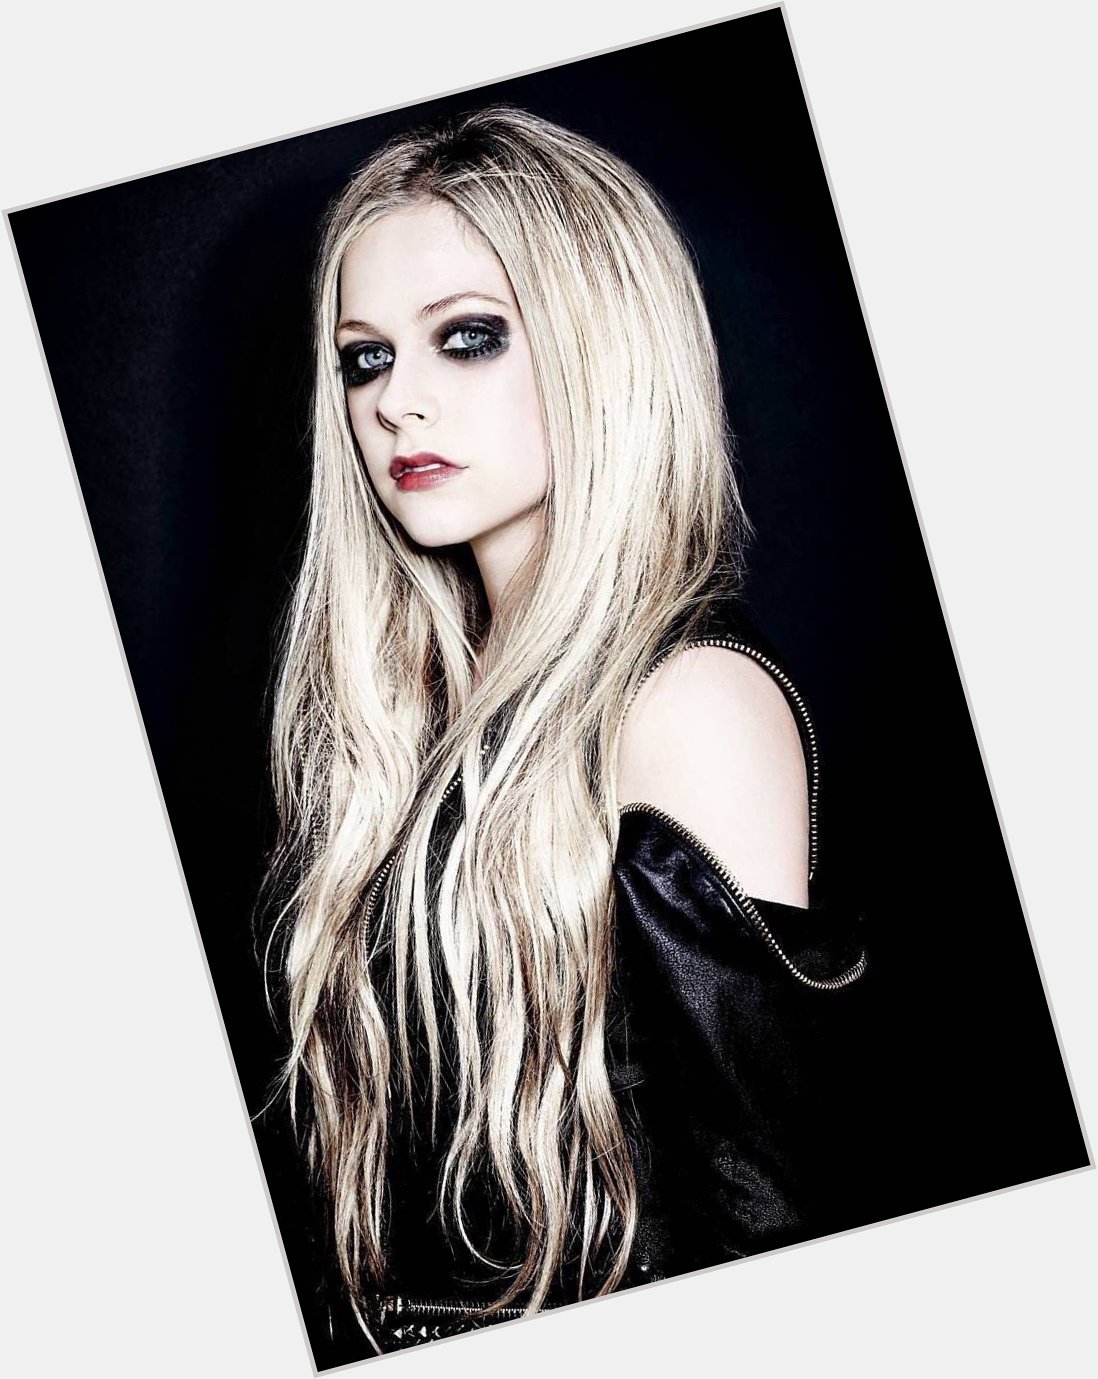 Avril Lavigne  Happy birthday  I love the music you make.

I love you.  